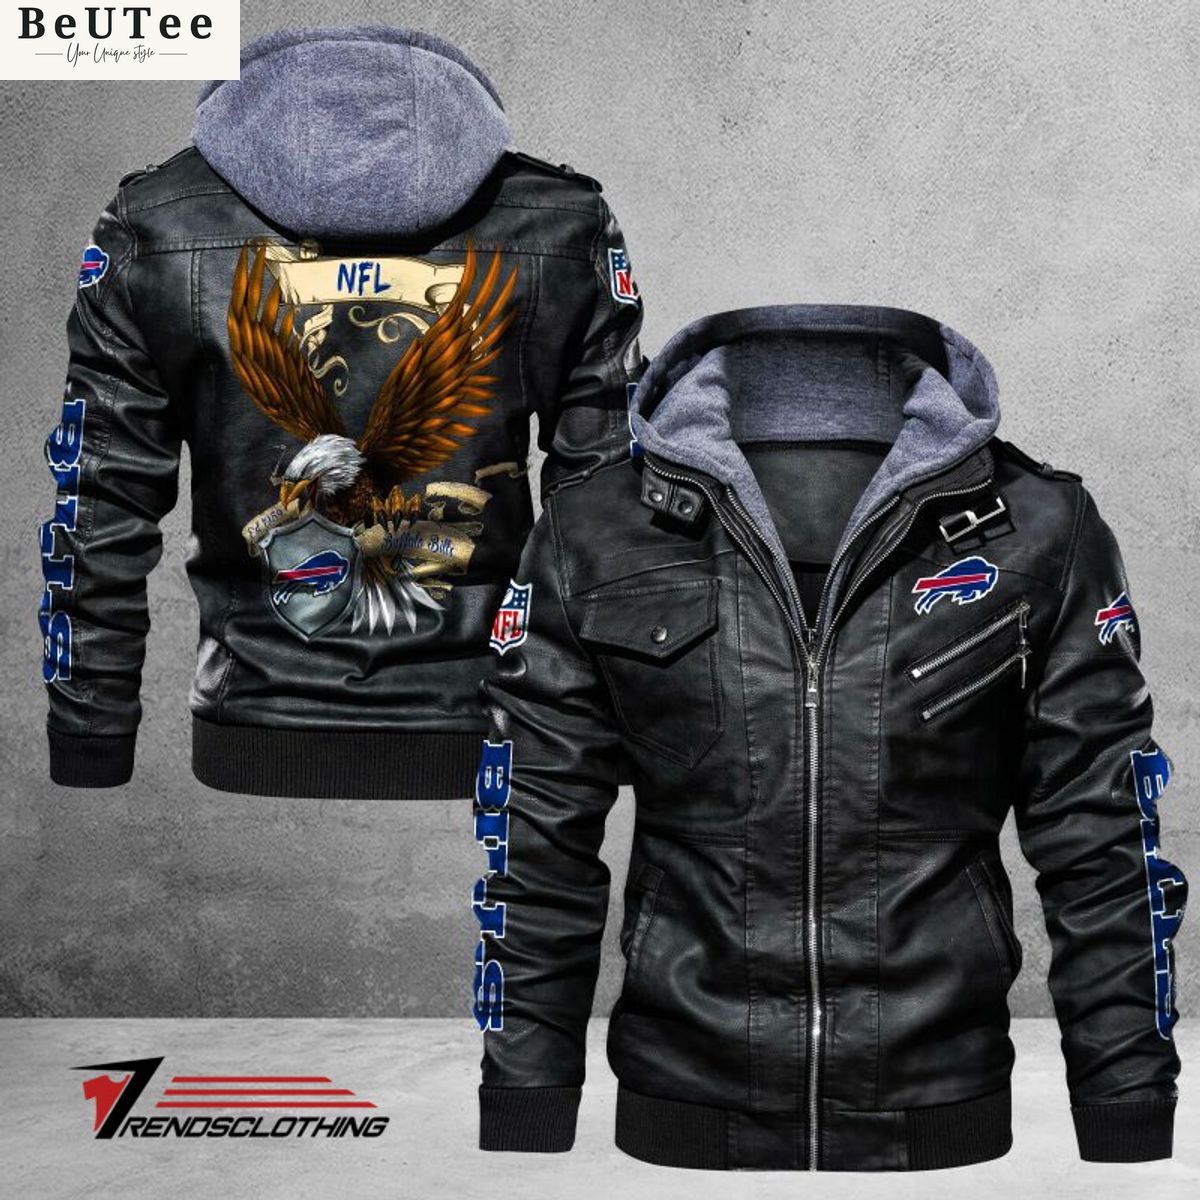 Buffalo Bills Trending 2D Leather Jacket Nice shot bro